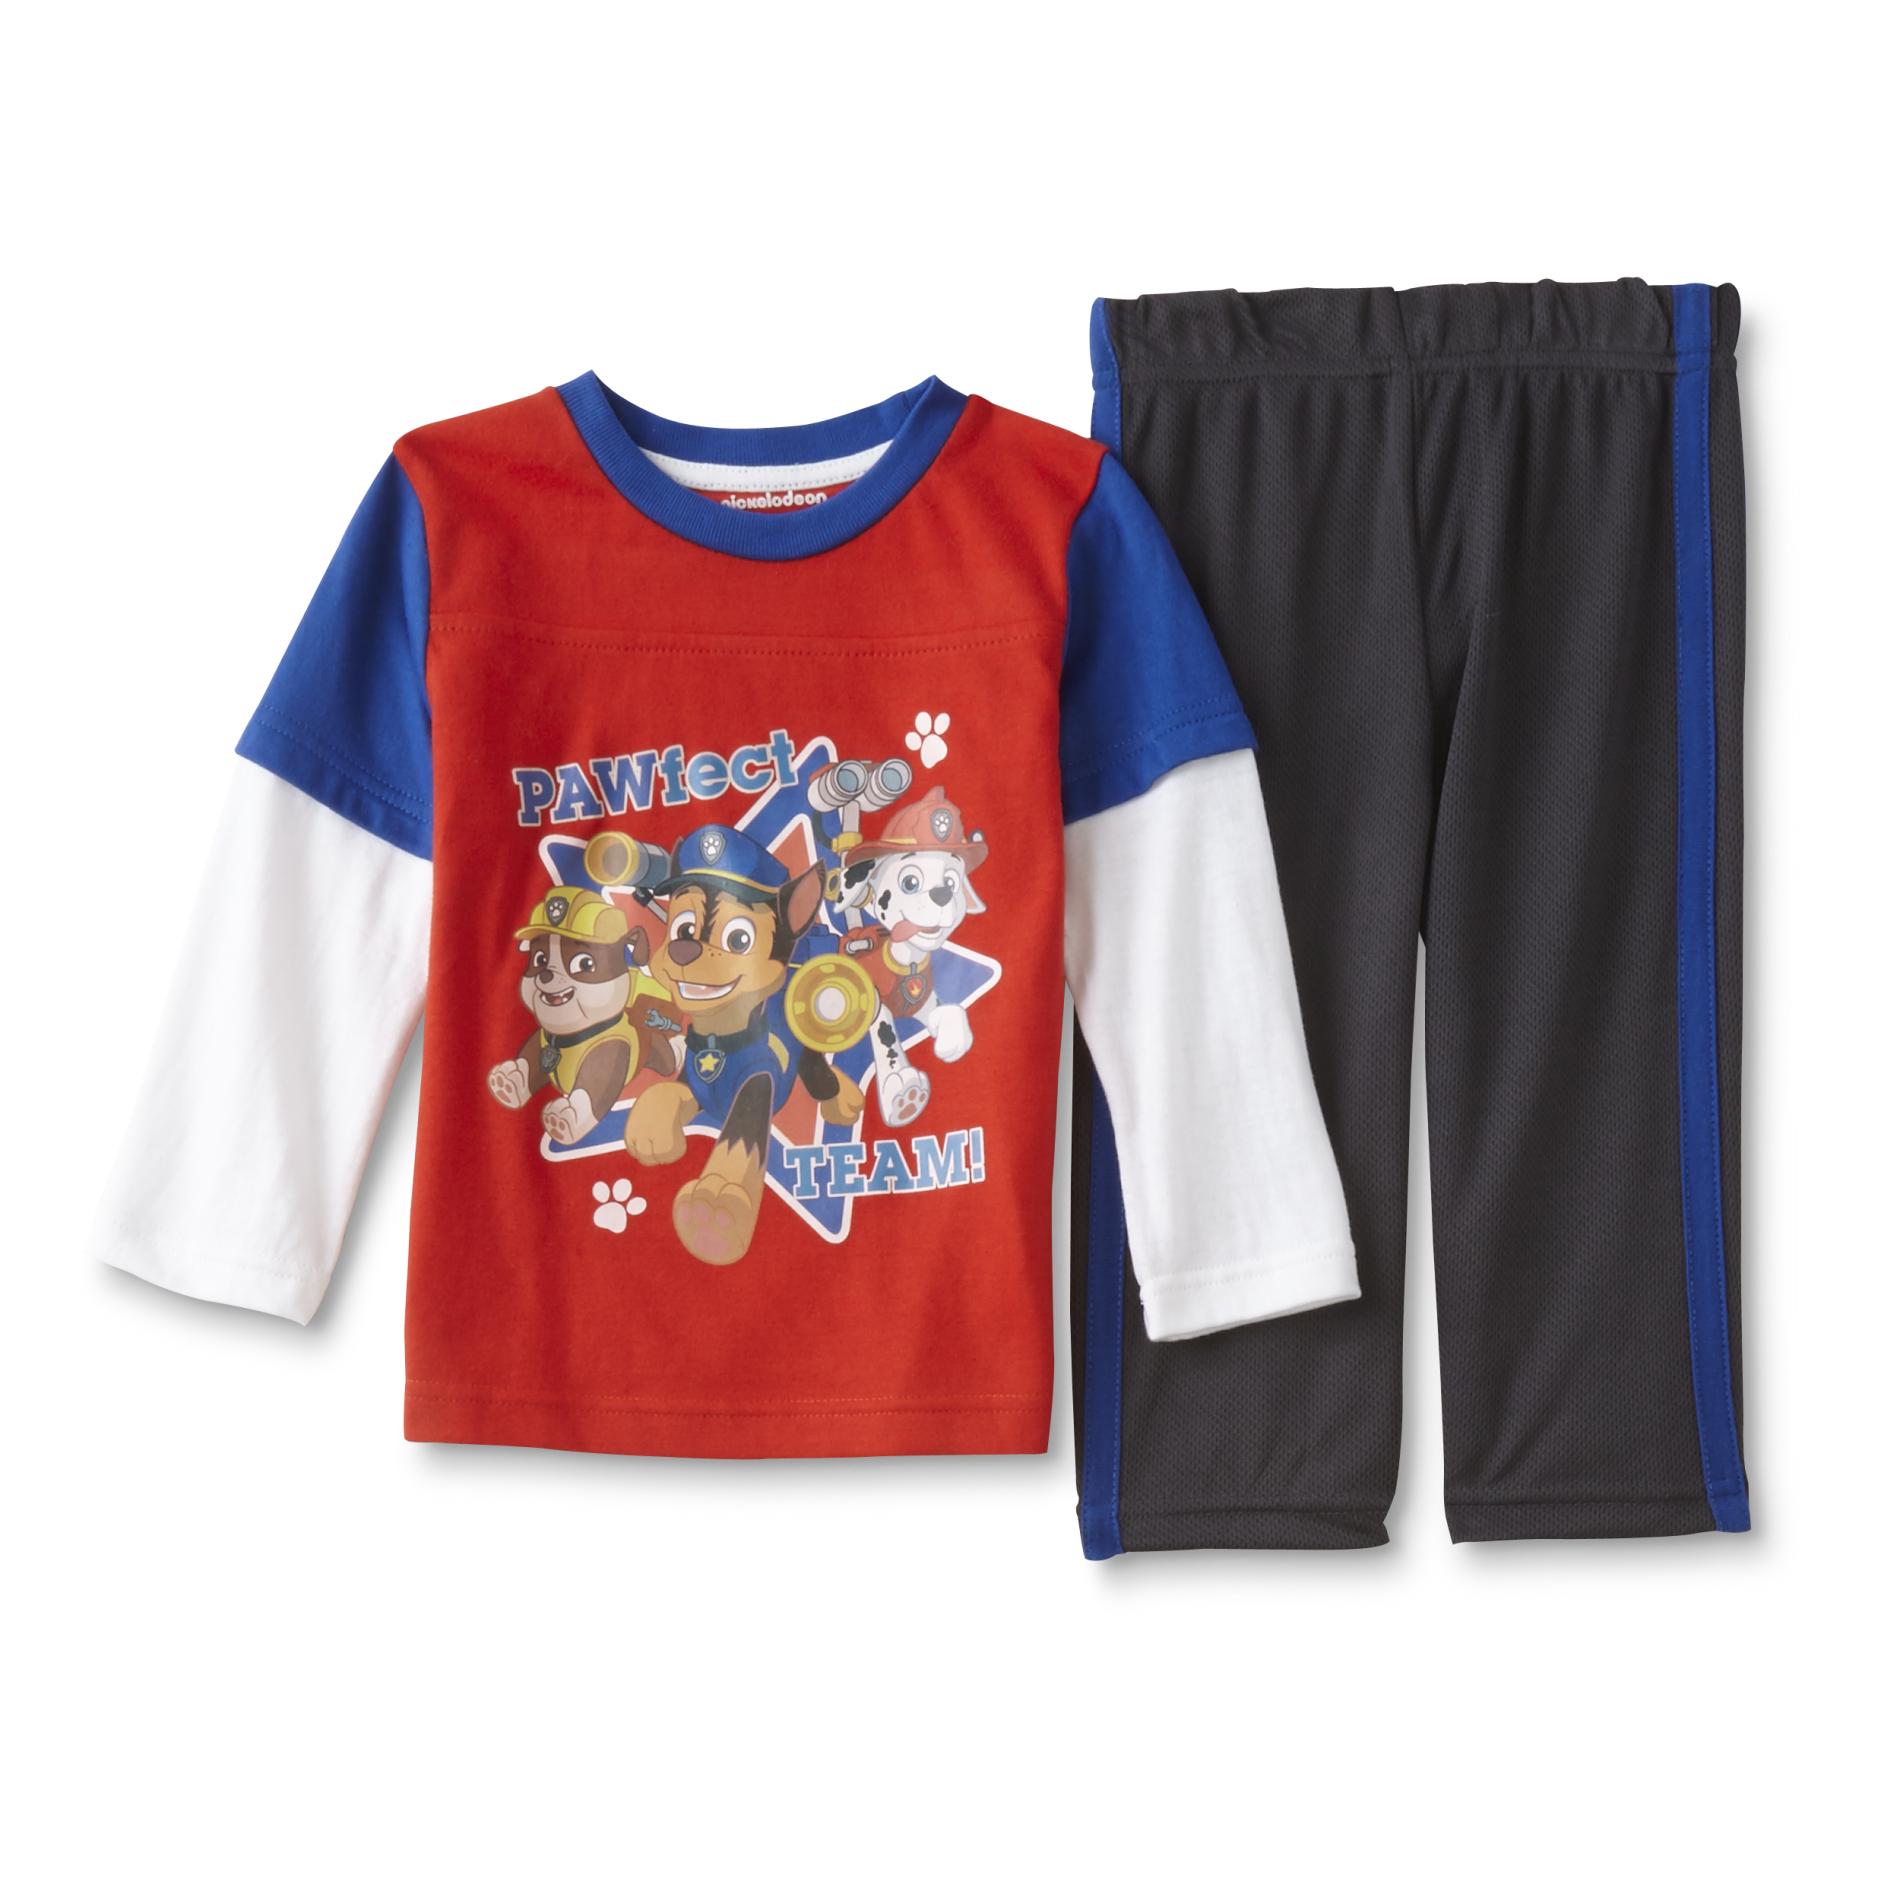 Nickelodeon PAW Patrol Infant & Toddler Boys' Layered-Look Shirt & Pants